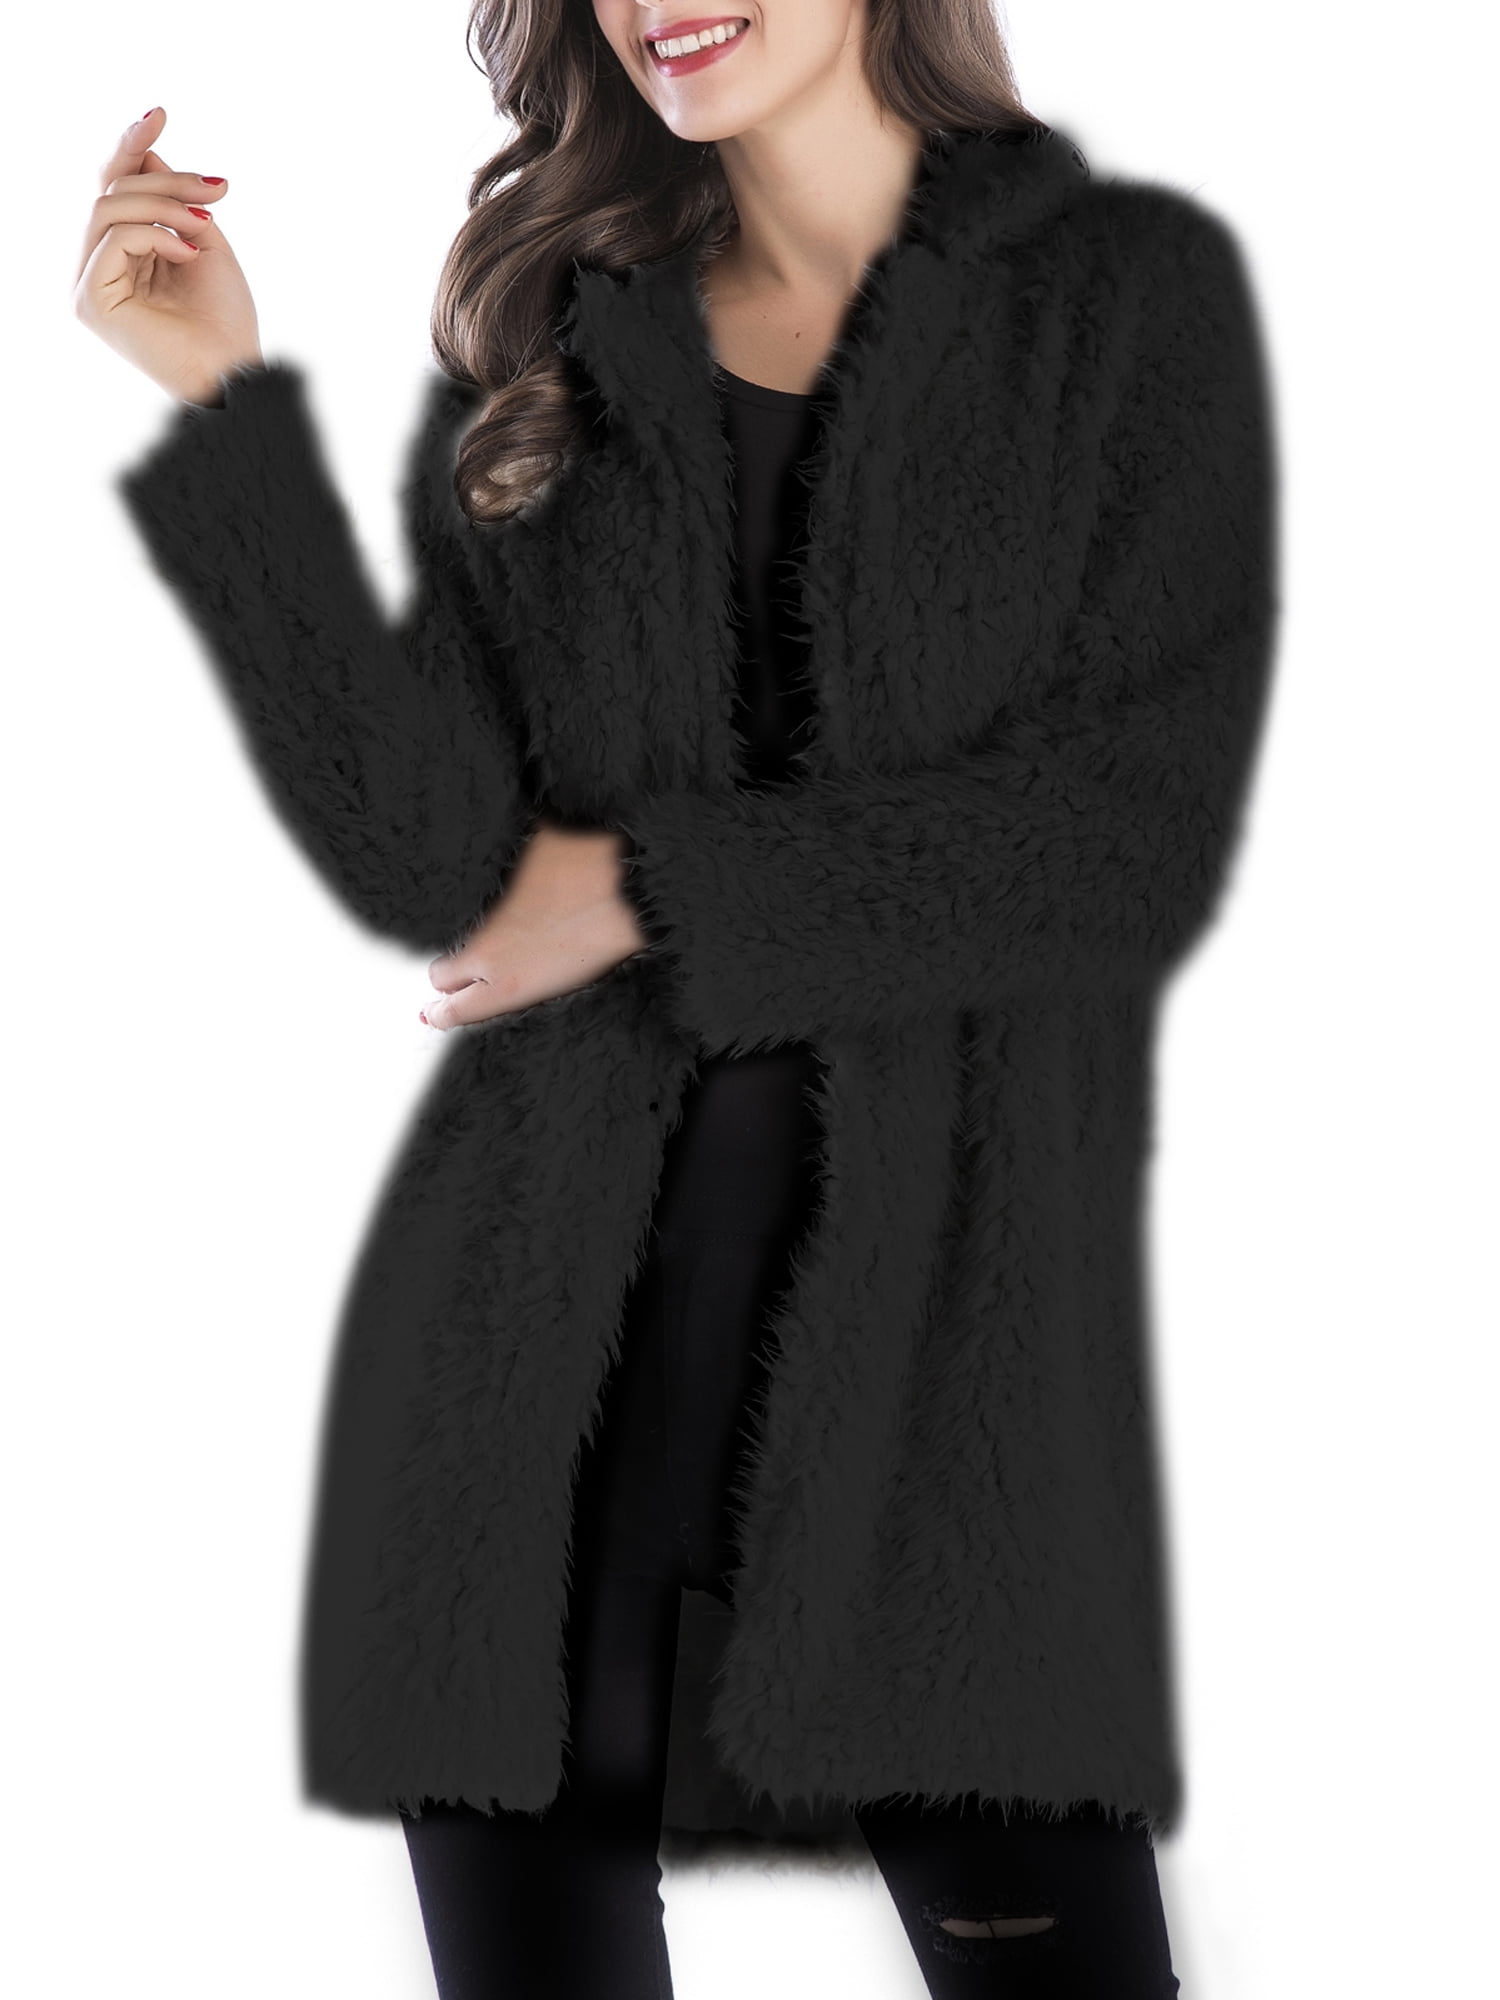 TUDUZ Womens Artificial Wool Cardigan Coat Jacket Ladies Winter Warm Turn-Down Collar Fuzzy Fleece Open Front Parka Outwear 